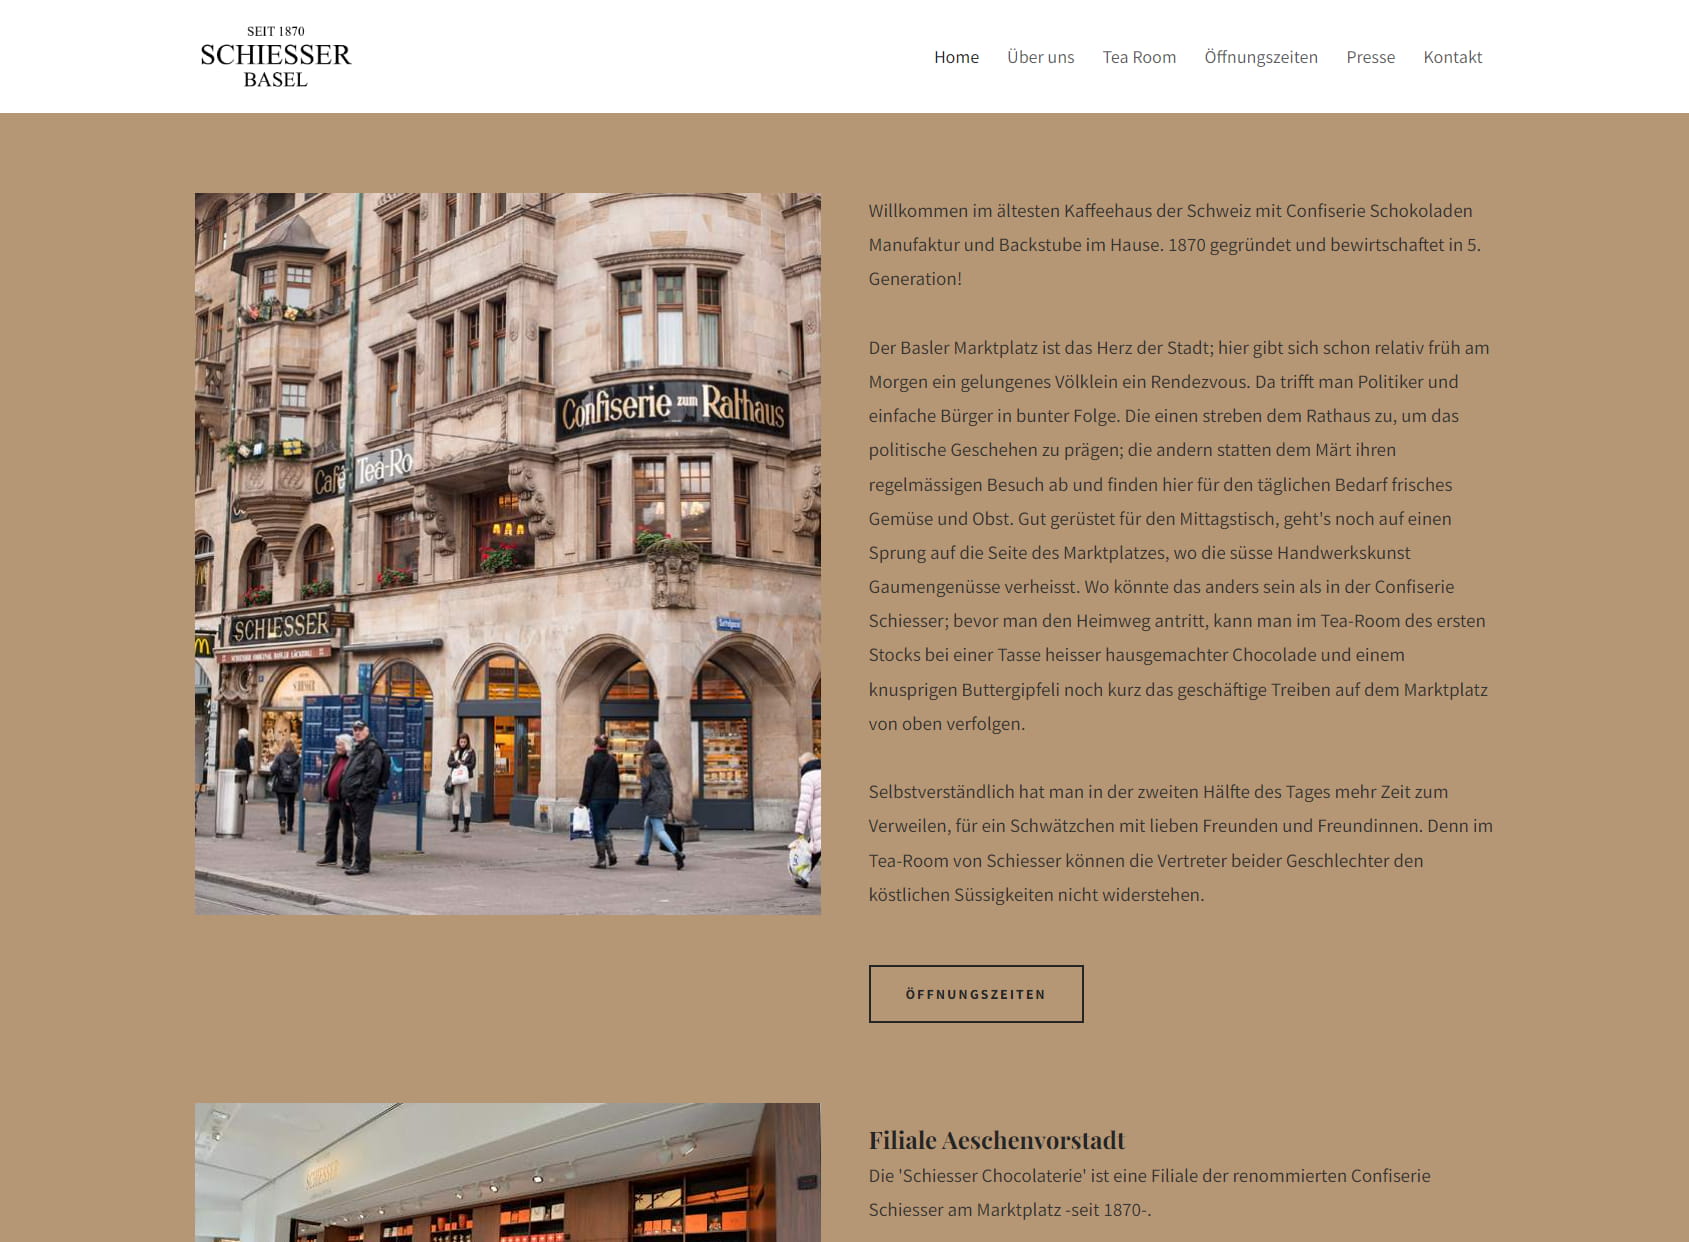 Confiserie Schiesser - seit 1870 - Café, Tea-Room, Confiserie zum Rathaus Basel